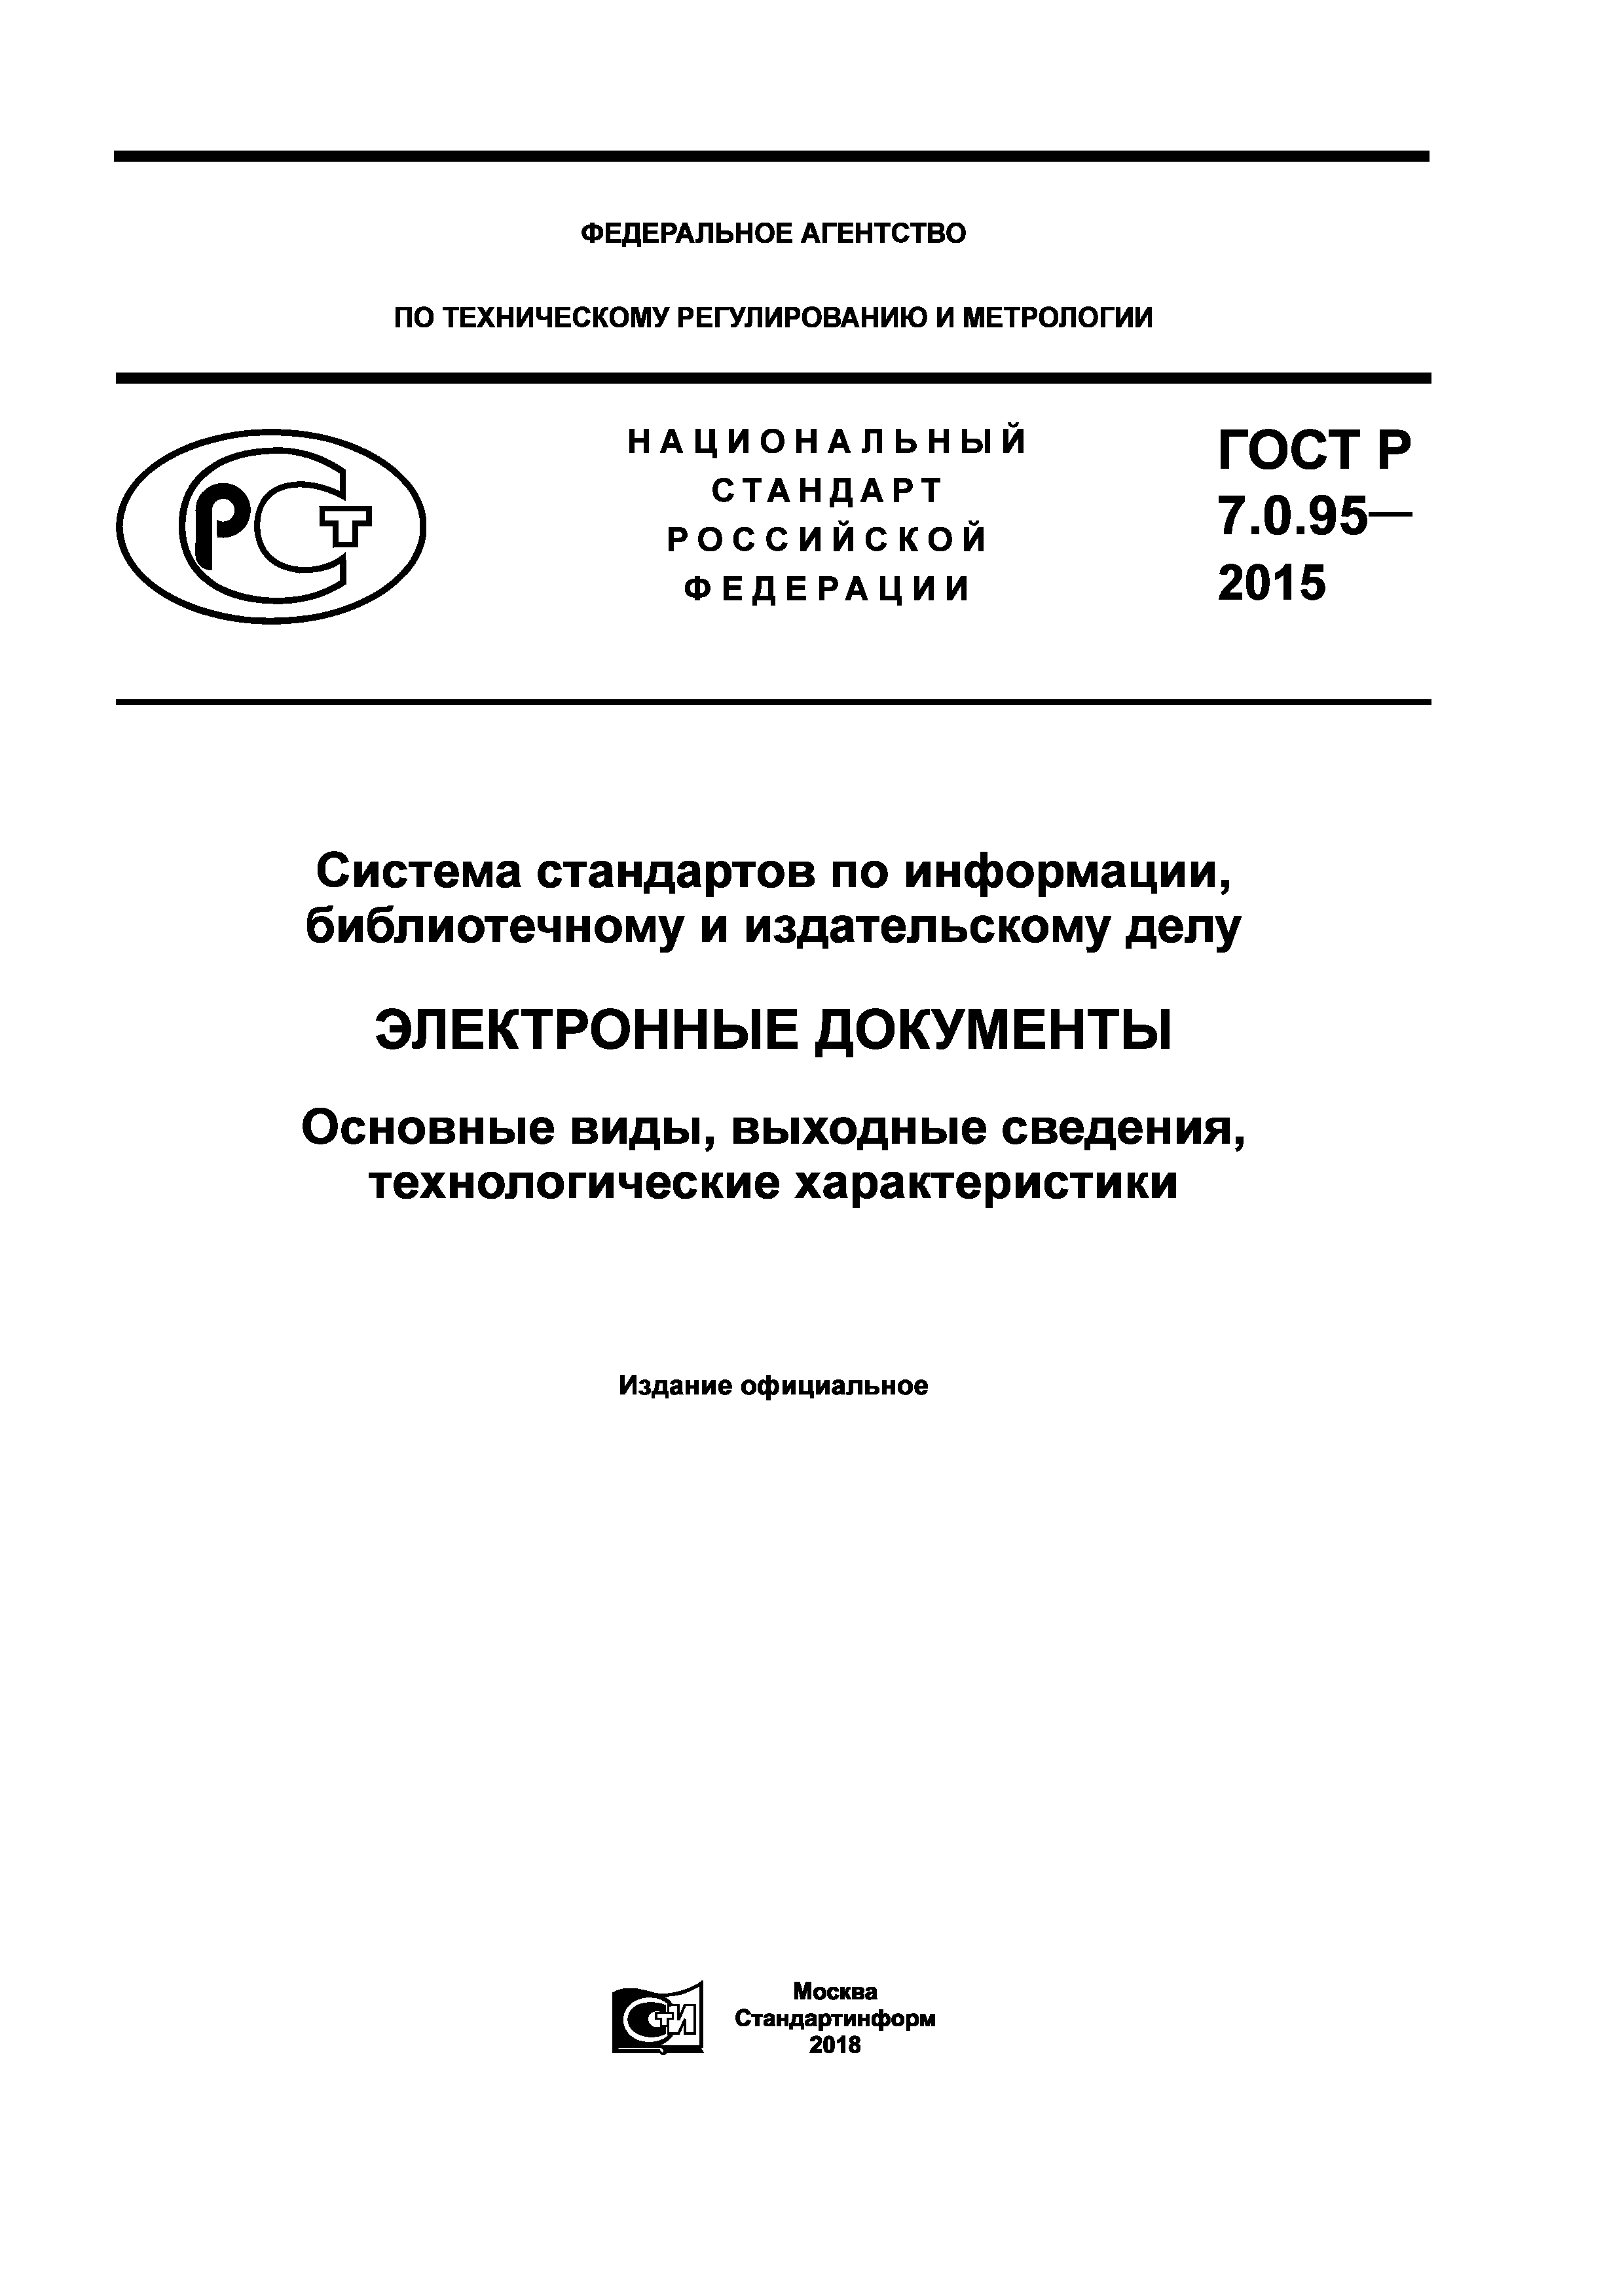 ГОСТ Р 7.0.95-2015